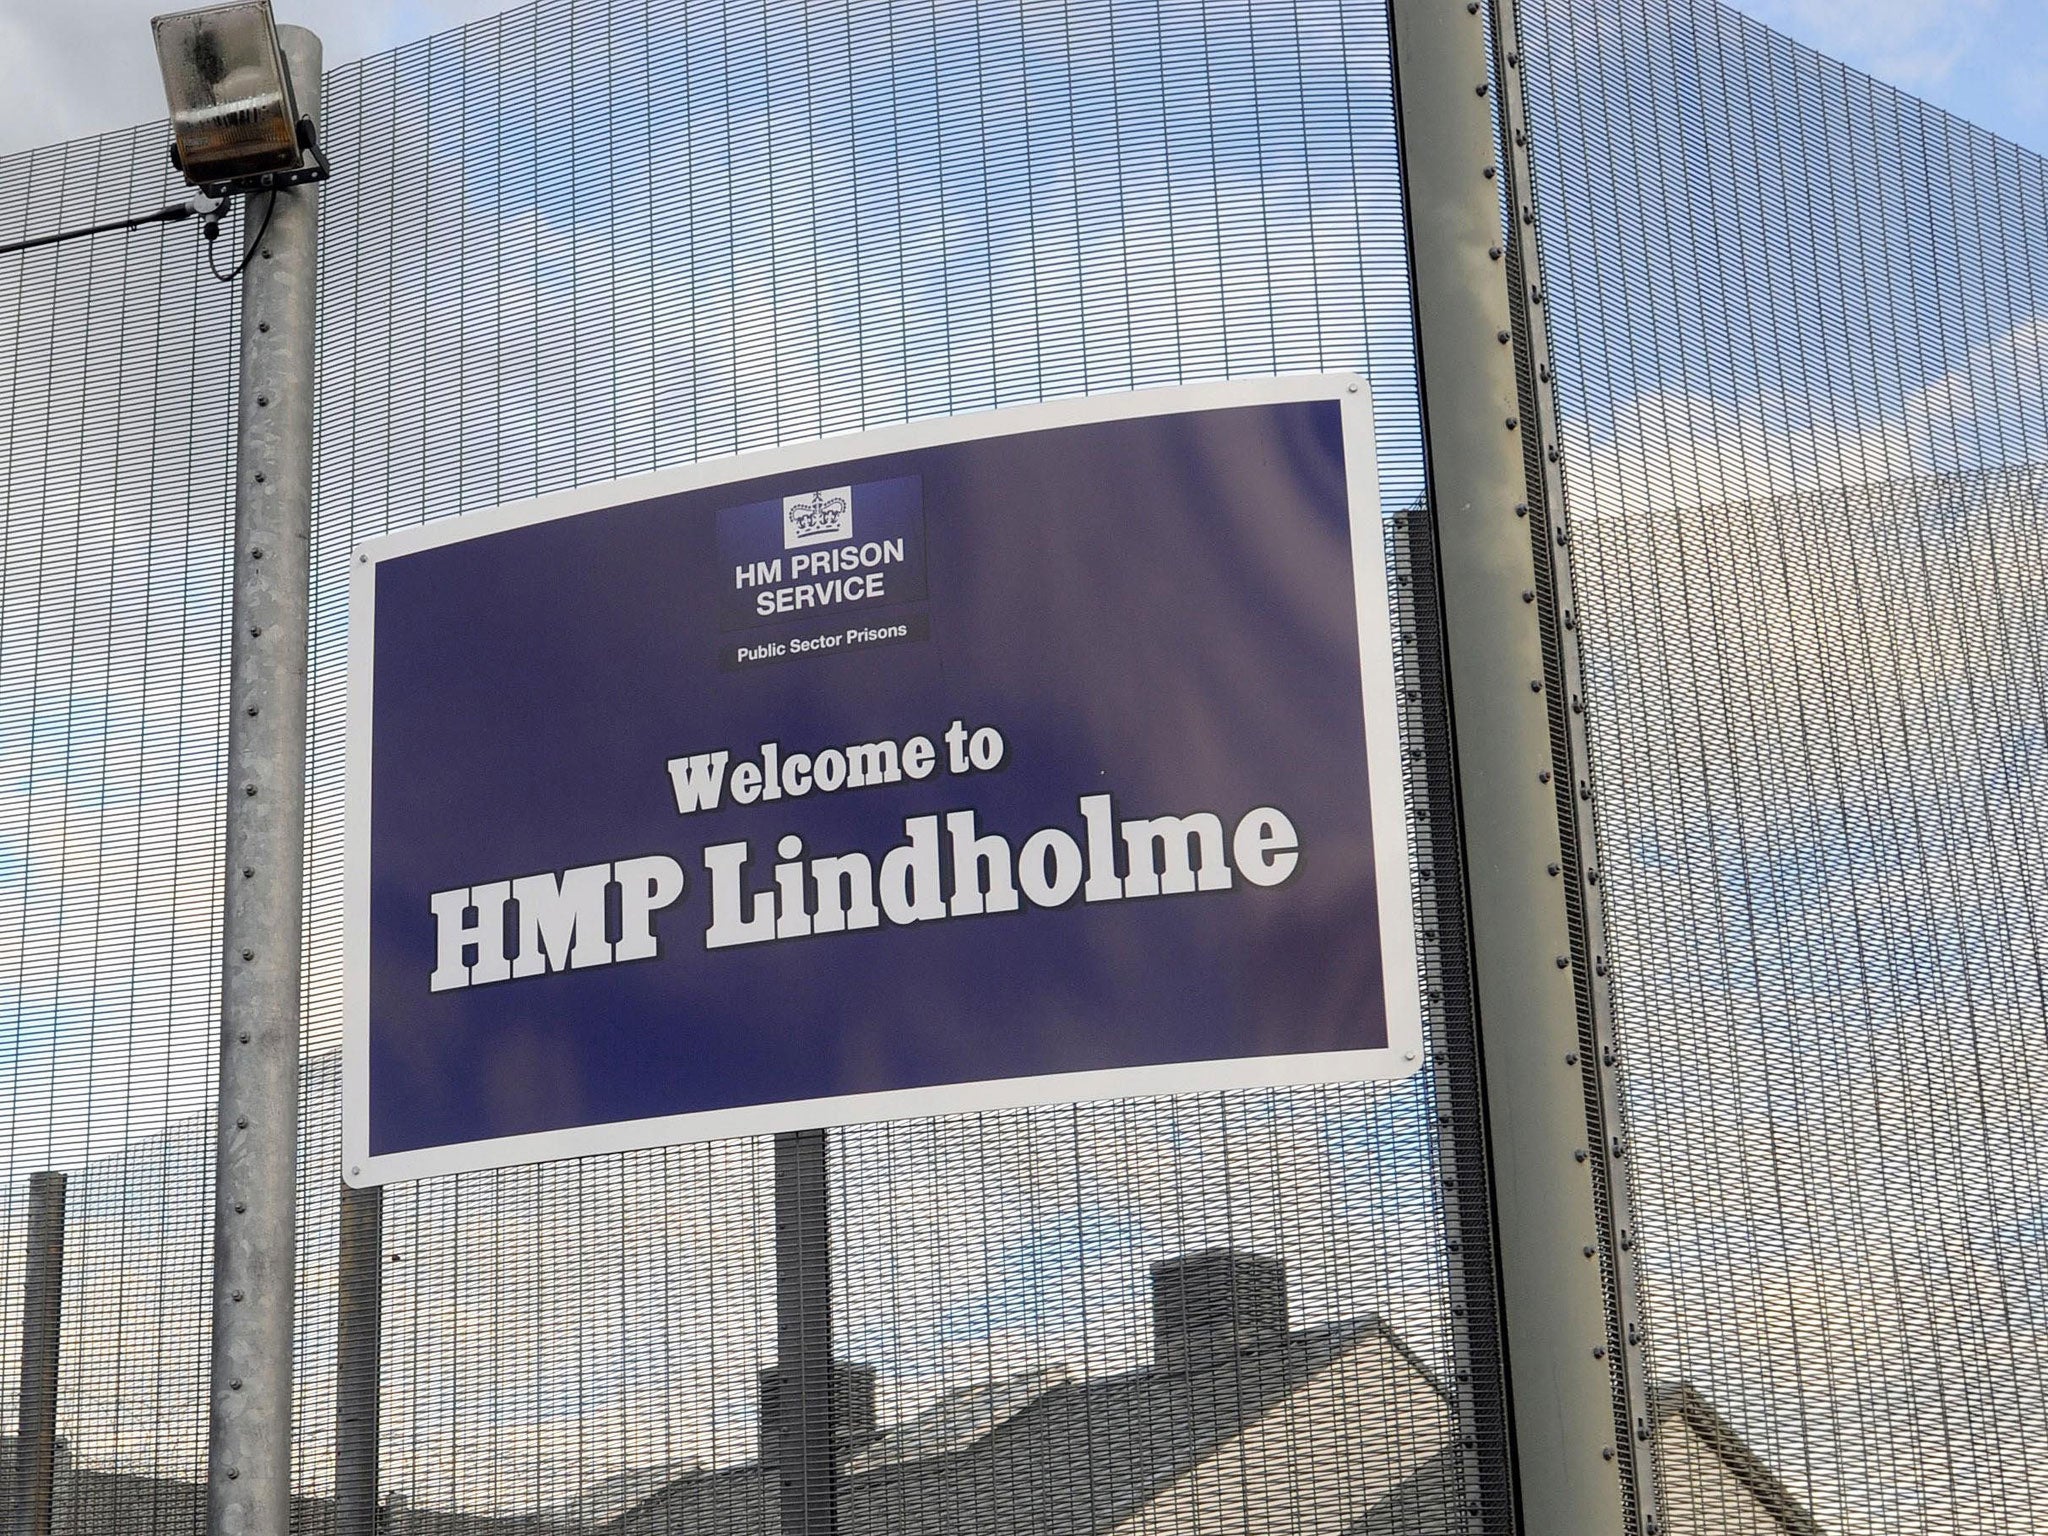 Two inmates have been arrested on suspicion of murder after a prisoner was found dead at HMP Lindholme